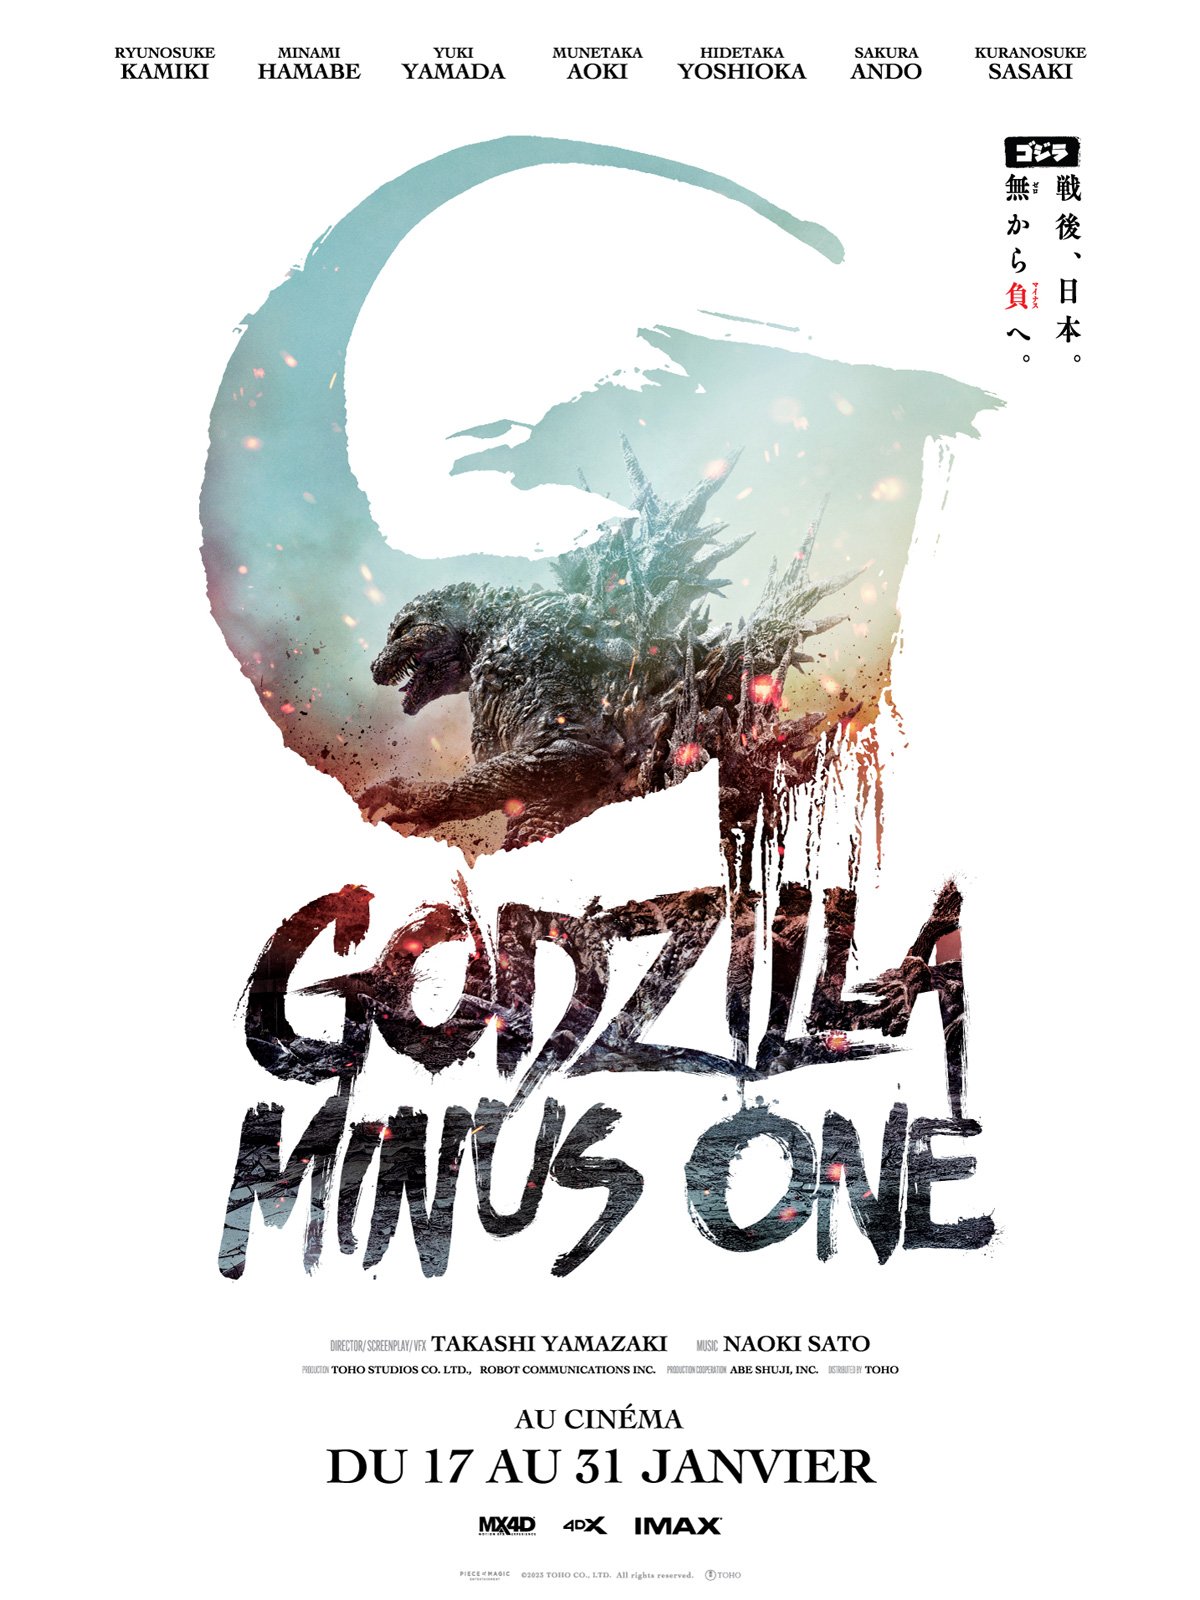 Godzilla Minus One streaming